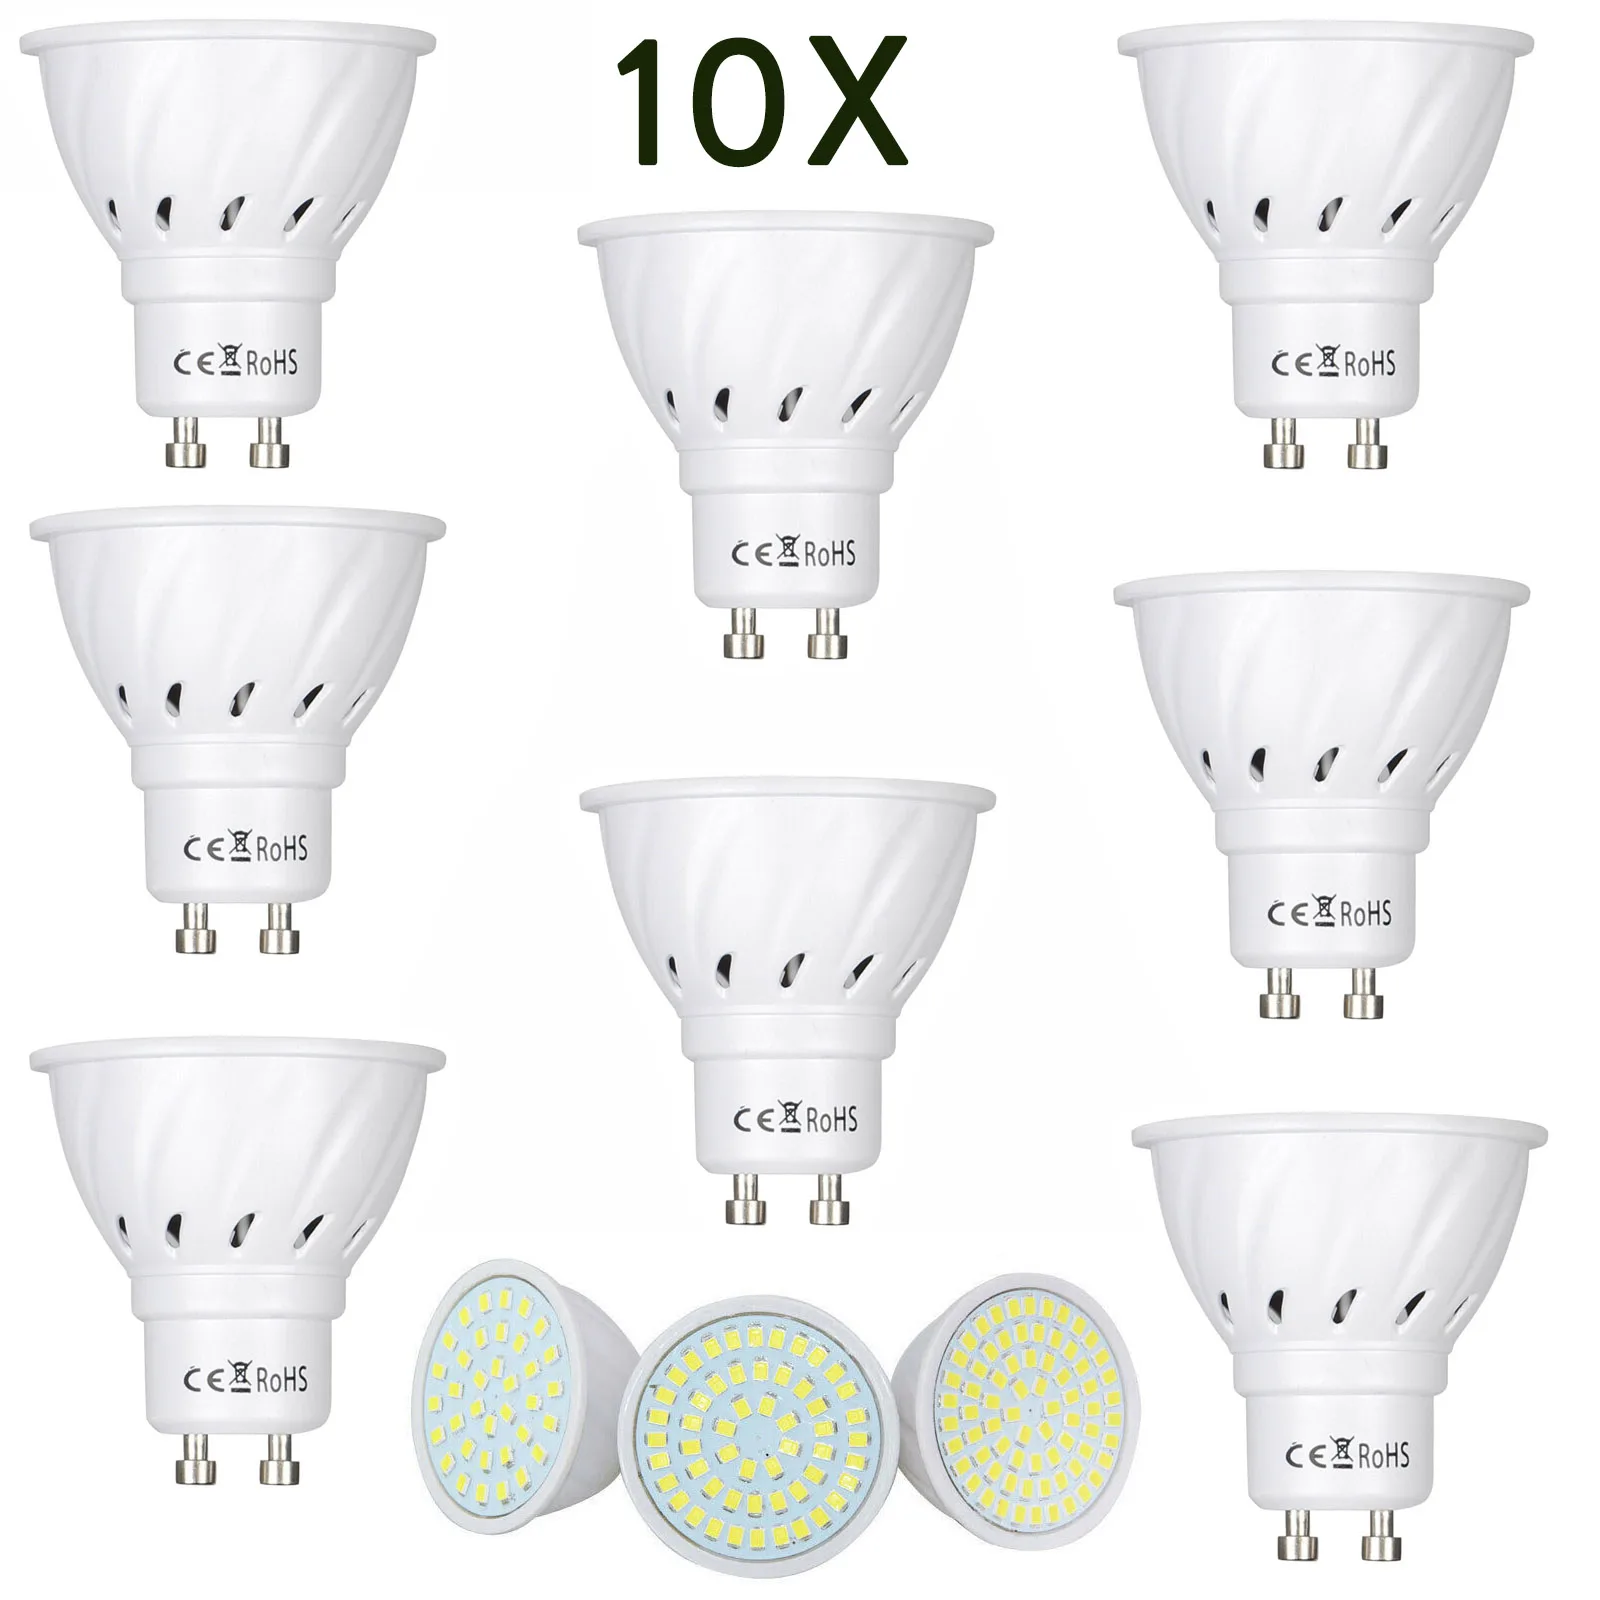 

10x GU10 LED Spotlight Bulbs 110V 220V 2835 SMD 4W 6W 8W 36 54 72LEDs Cold Warm Neutral White GU 10 Lamp 12V 24V For Home Decor